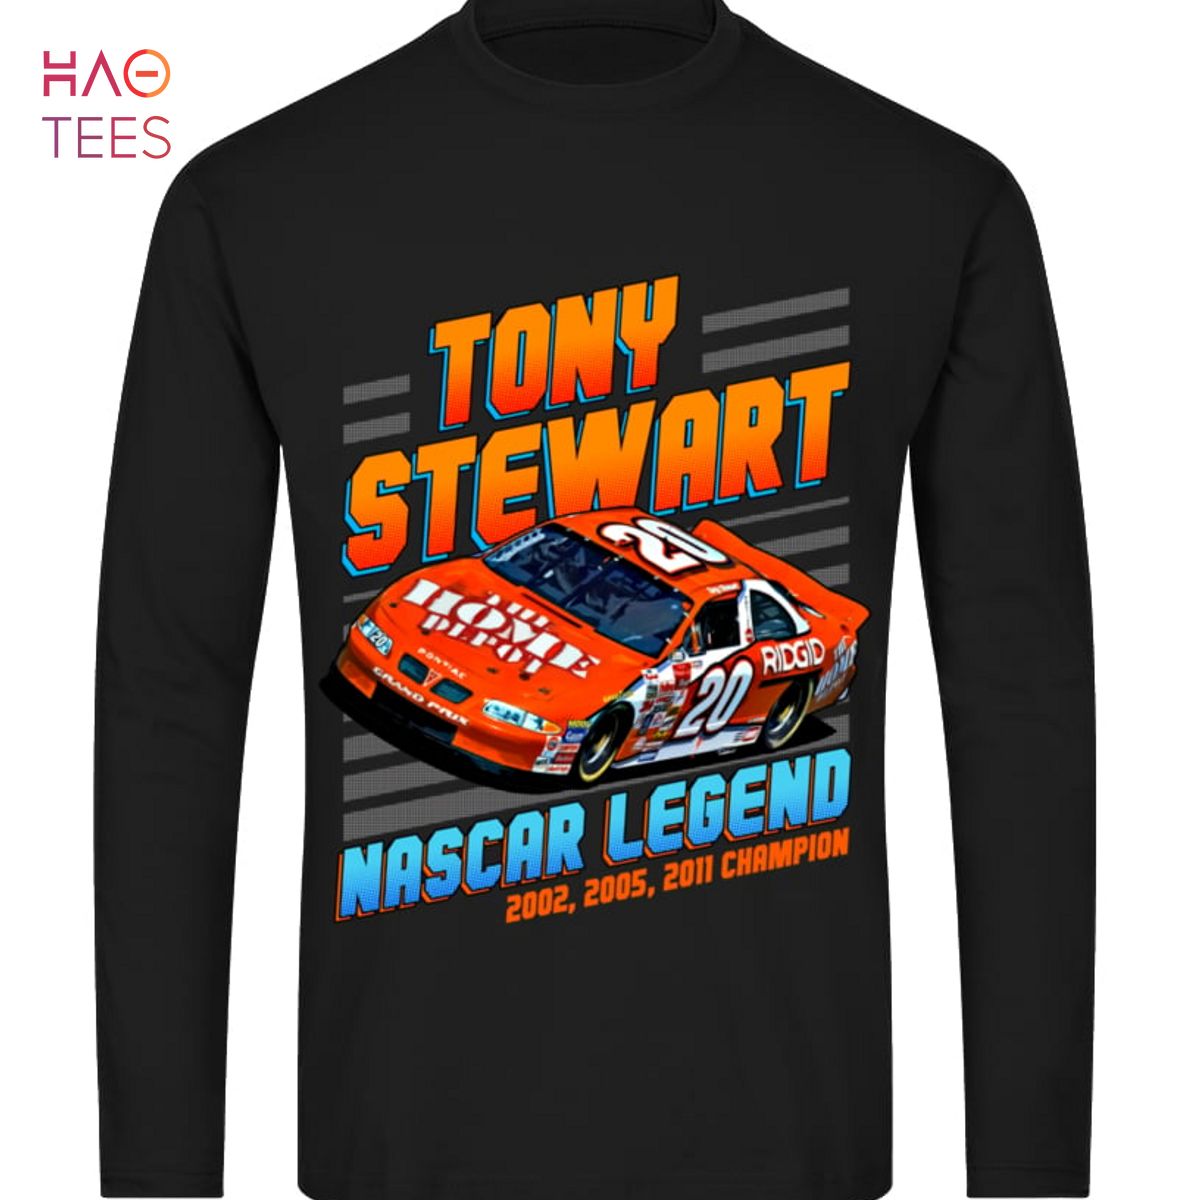 Tony Stewart Nascar Legend Champion Shirt